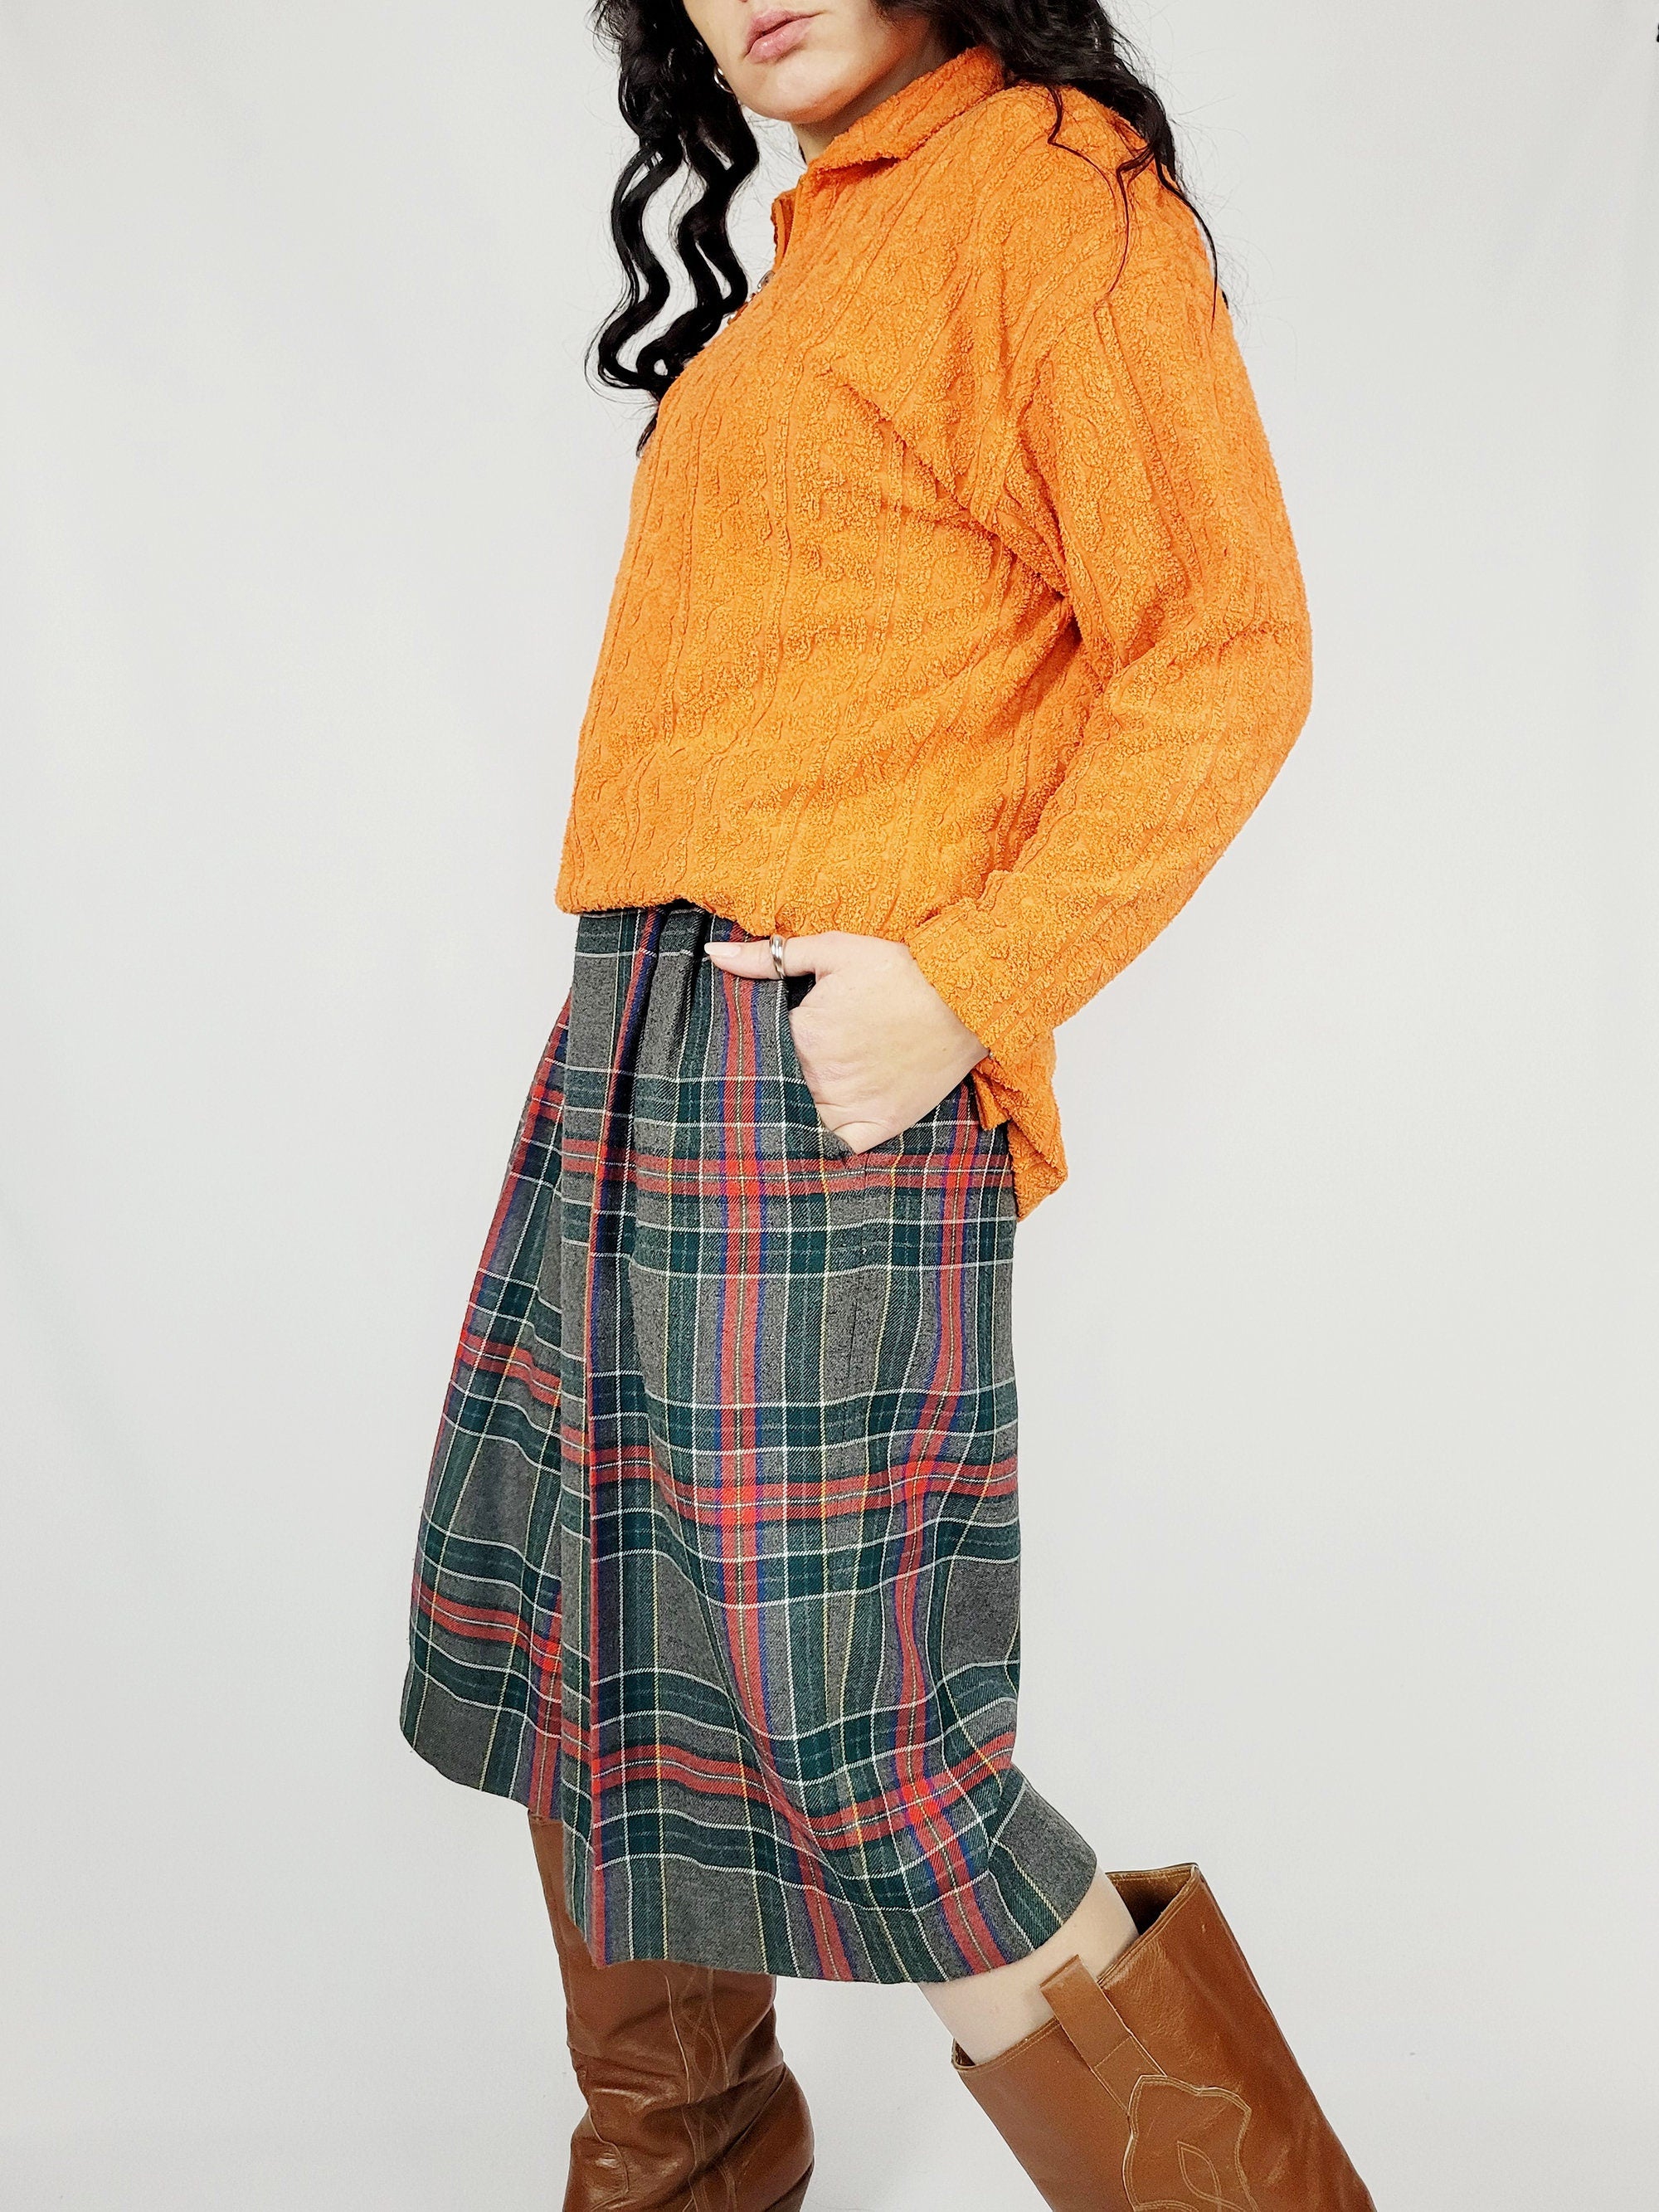 90s orange terry cloth minimalist quarter zip sweatshirt